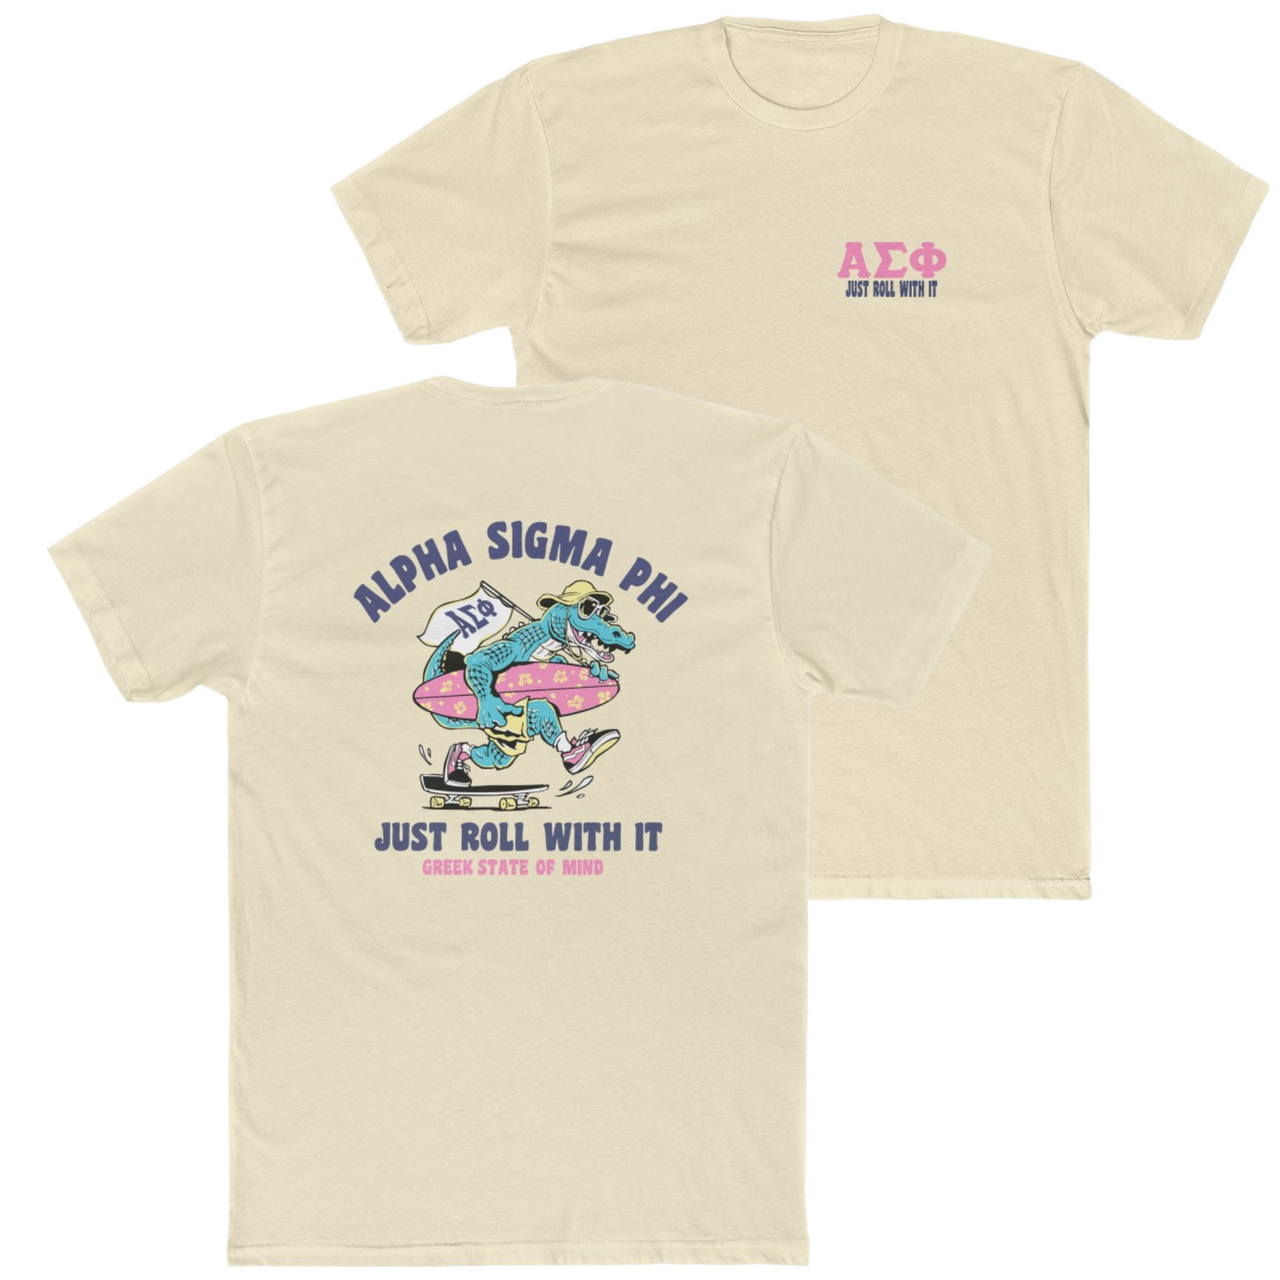 Natural Alpha Sigma Phi Graphic T-Shirt | Alligator Skater | Alpha Sigma Phi Fraternity Shirt